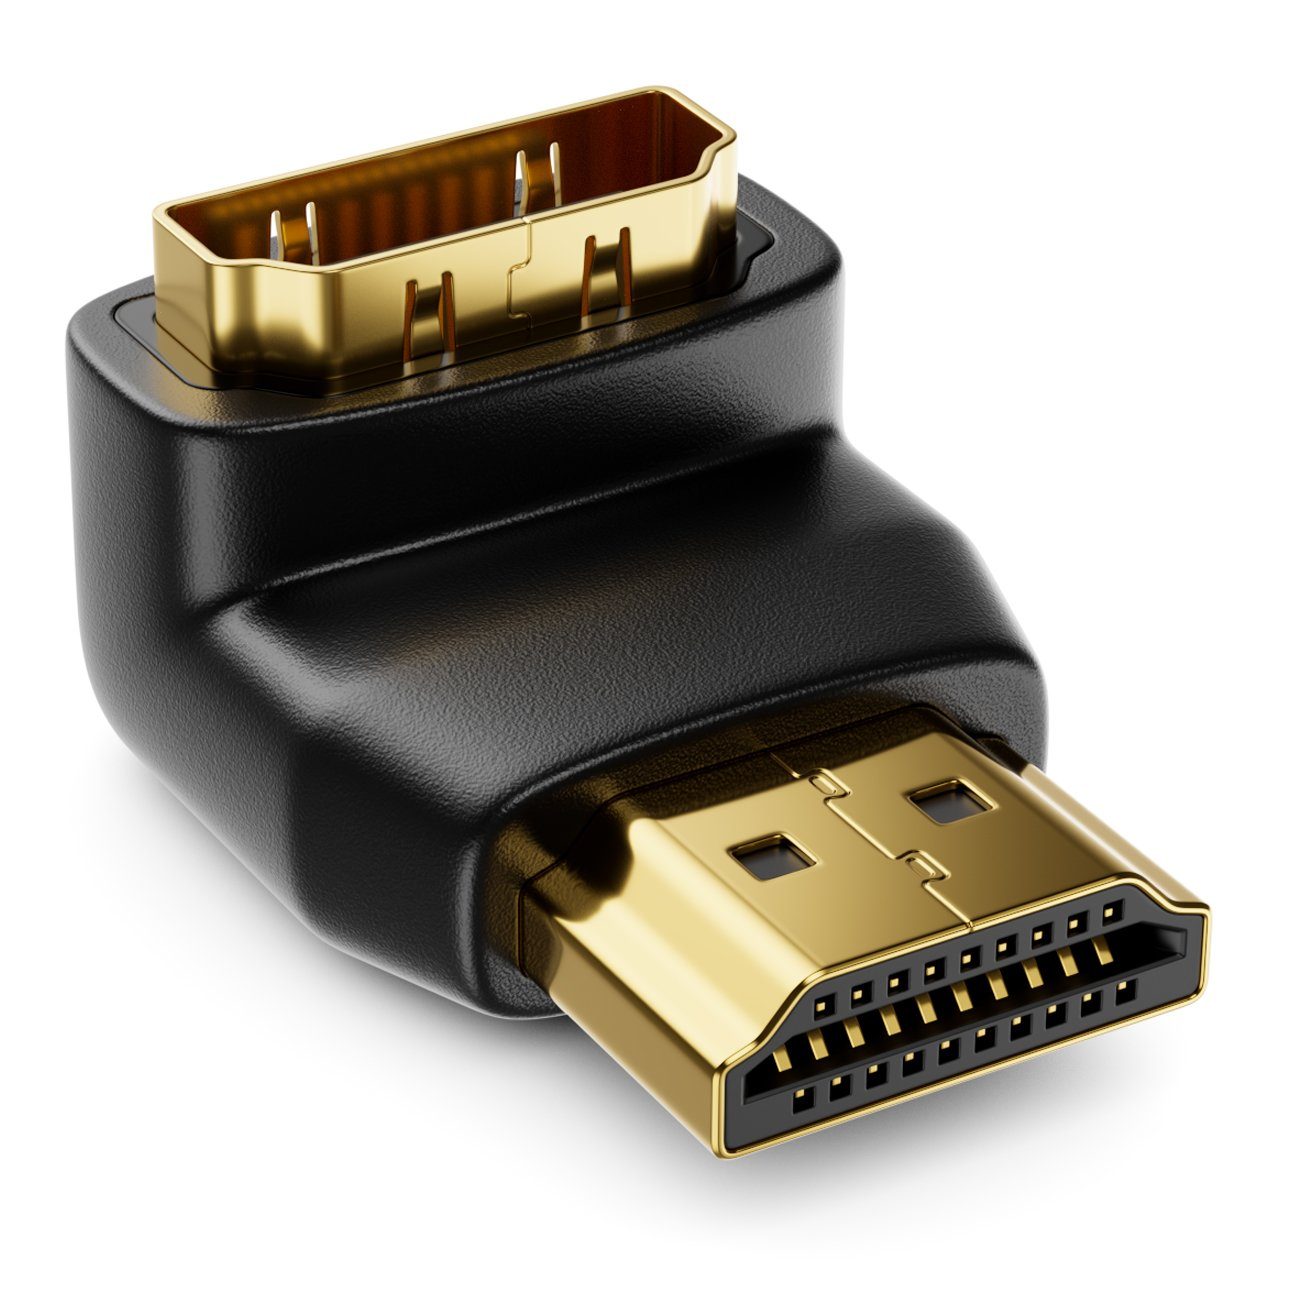 deleyCON deleyCON HDMI Winkel Adapter - 270° Grad gewinkelt - HDMI Stecker zu HDMI-Kabel